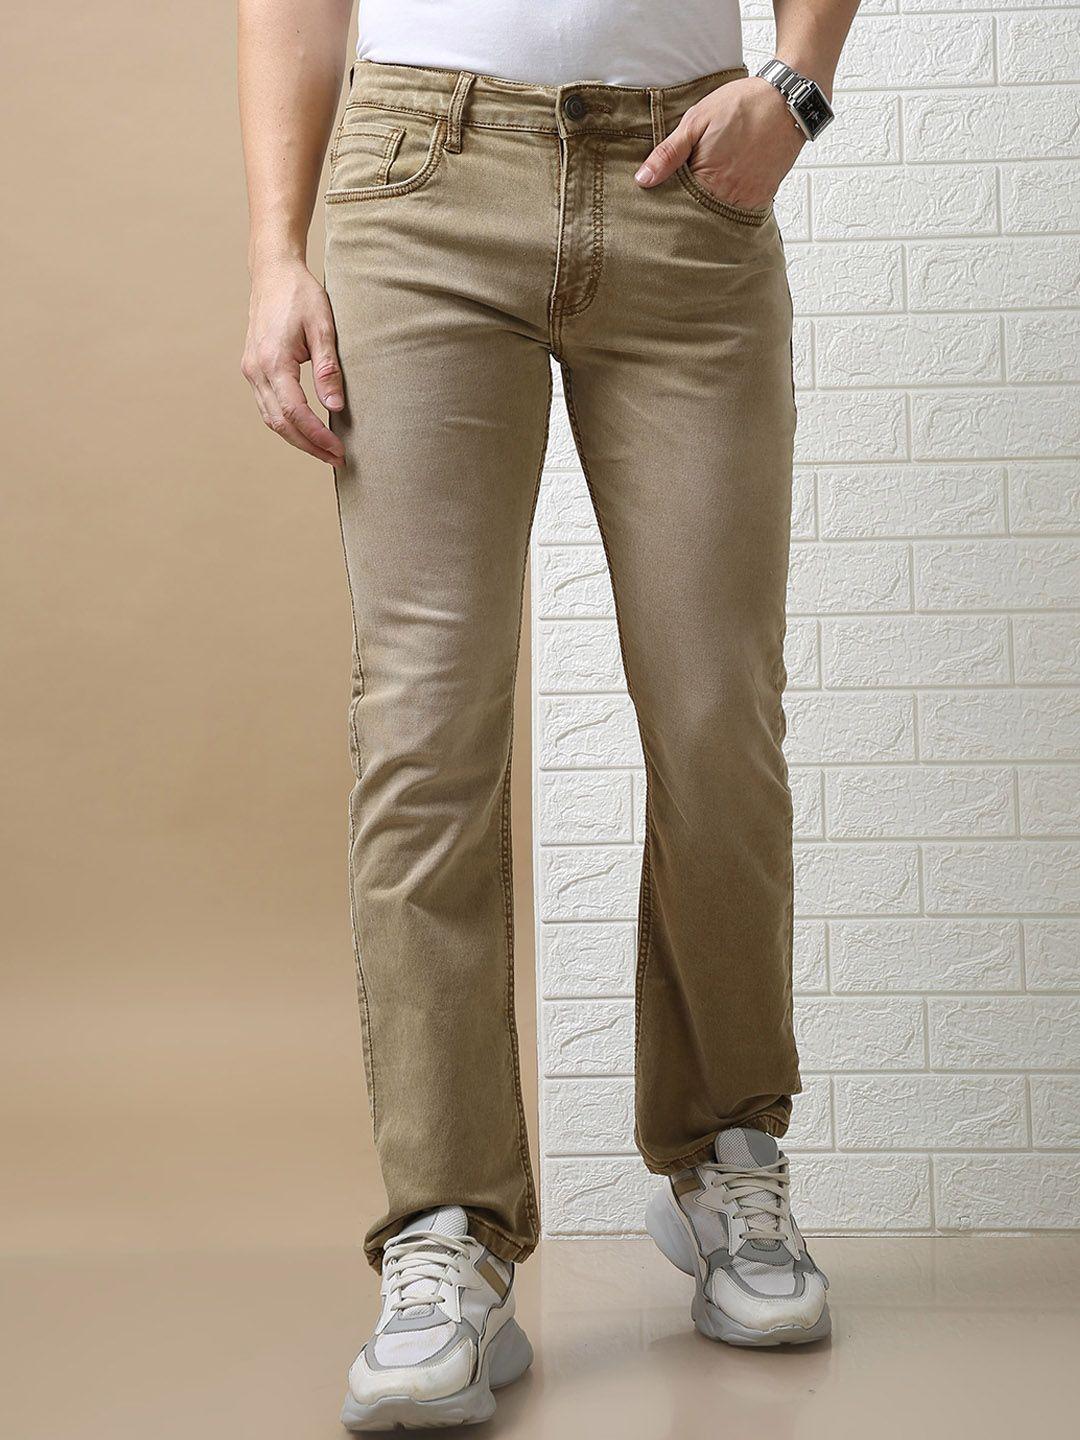 vudu-men-comfort-relaxed-fit-clean-look-cotton-jeans